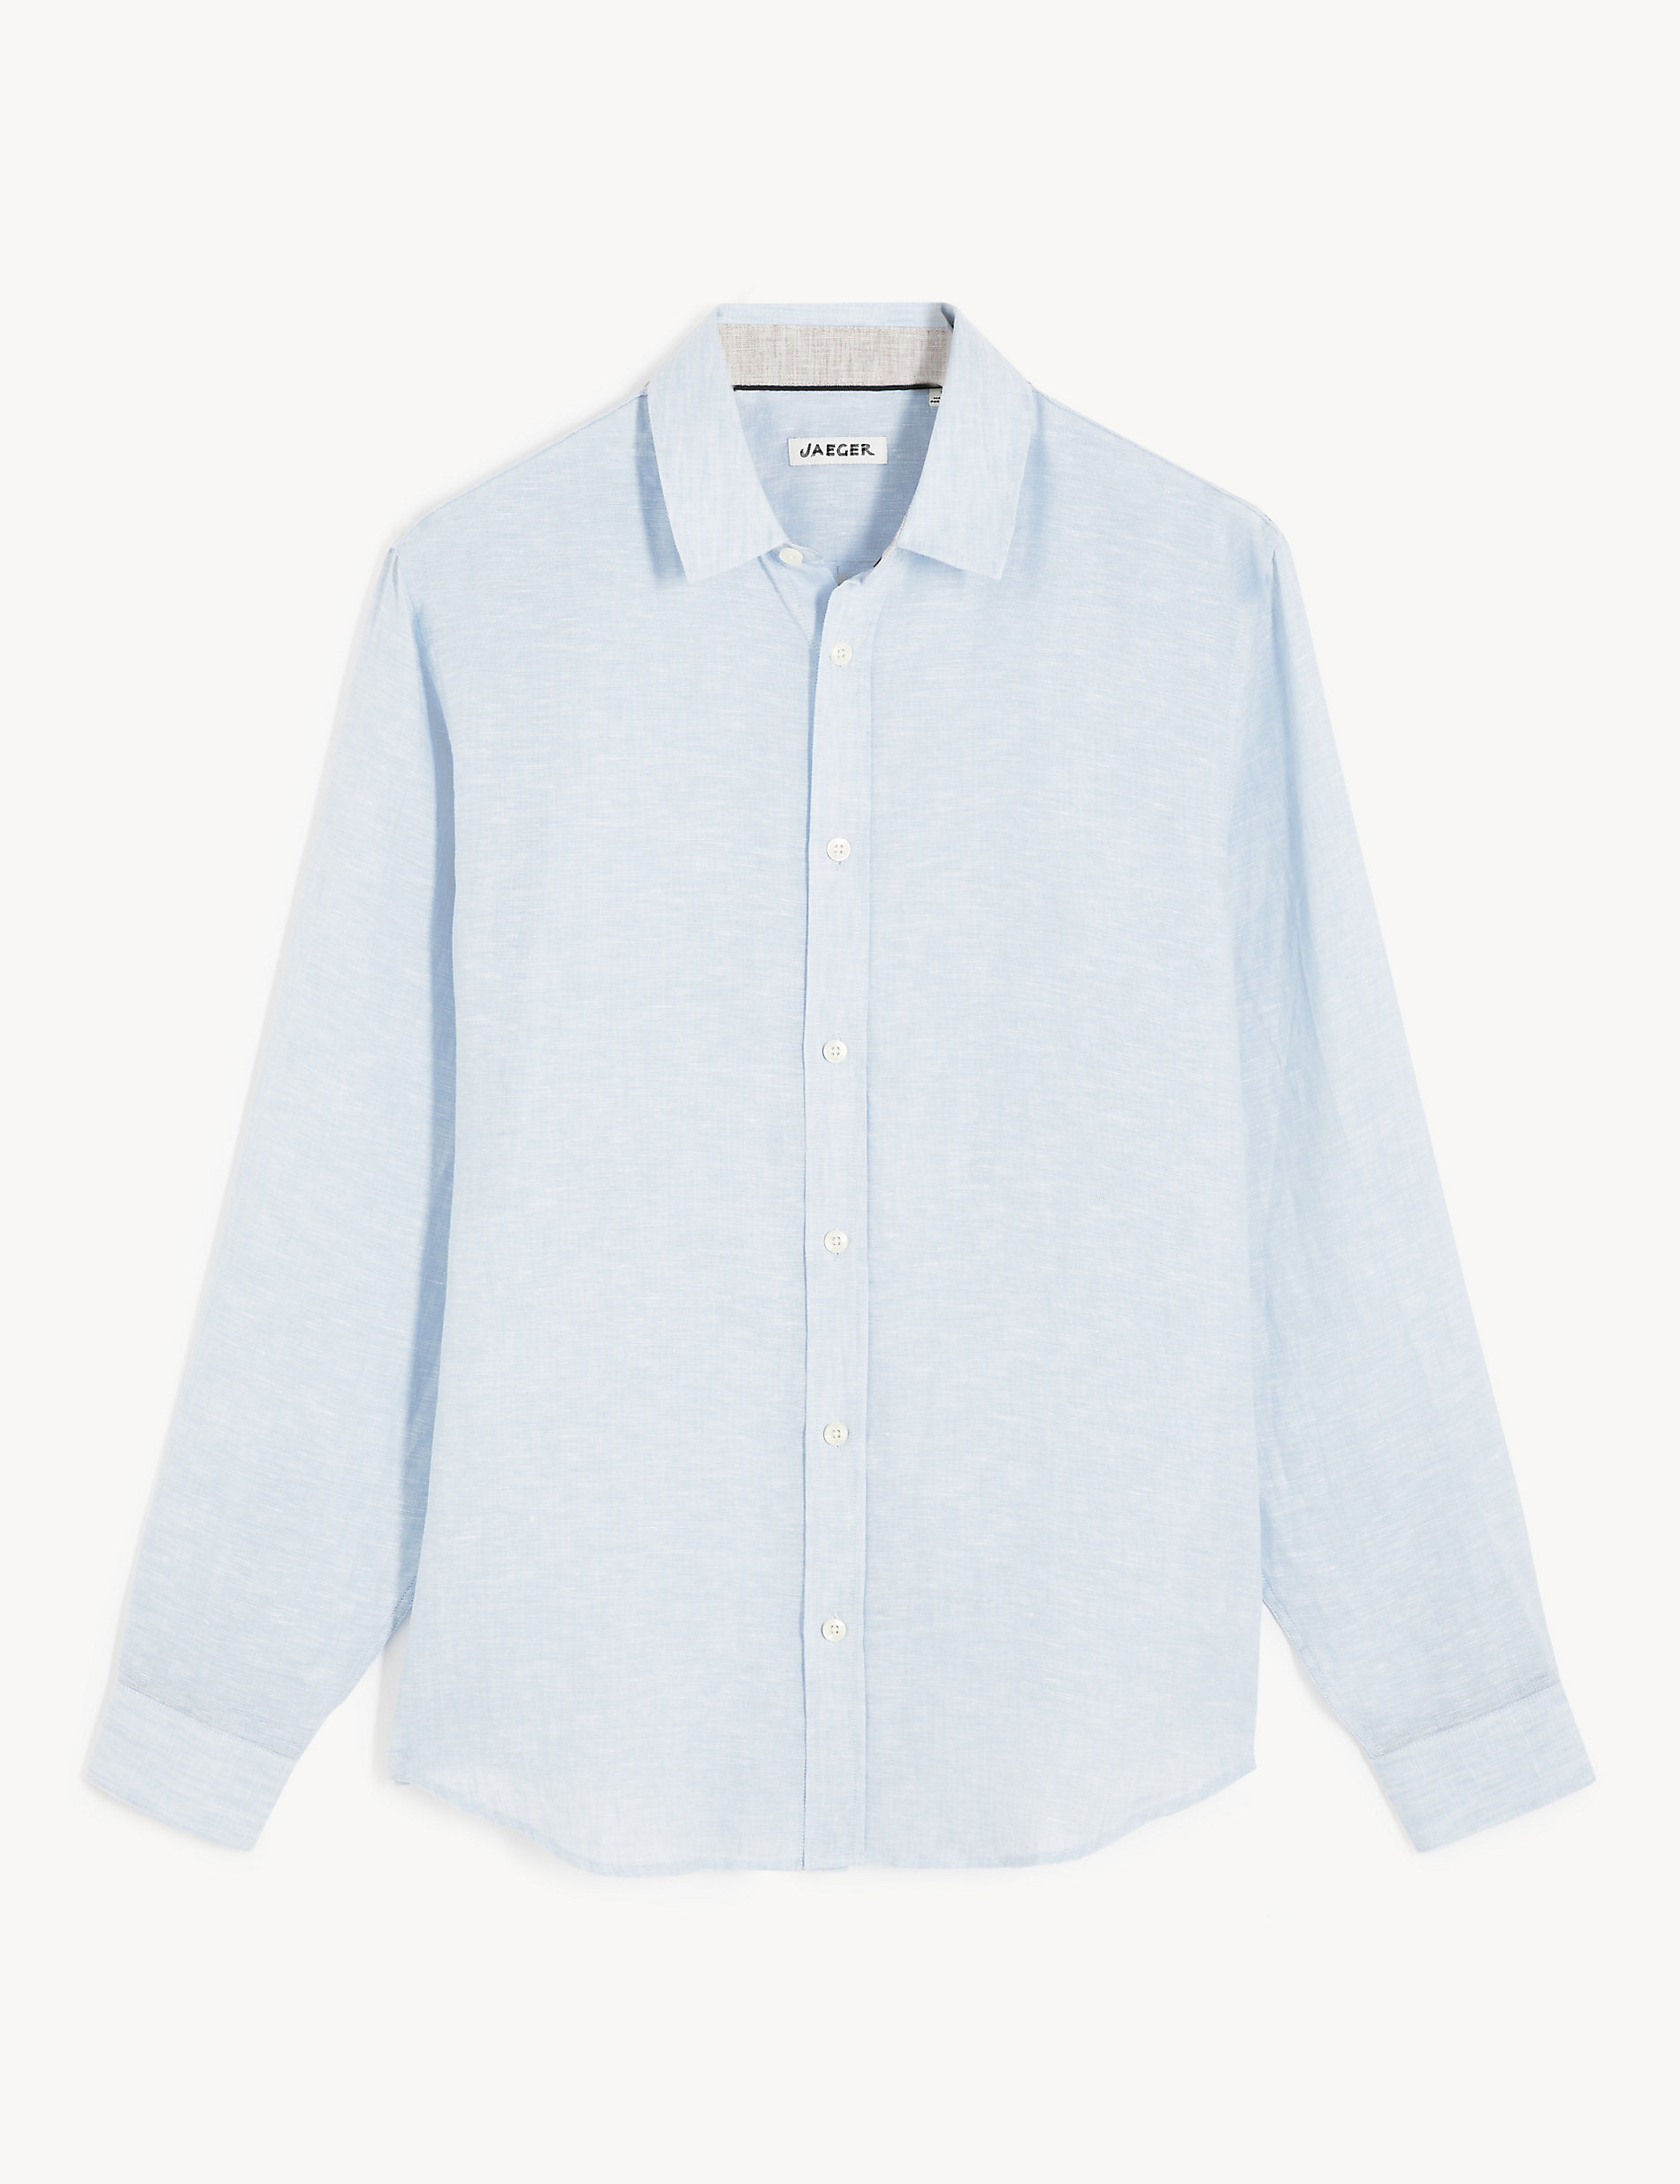 Luxury Pure Linen Long Sleeve Shirt